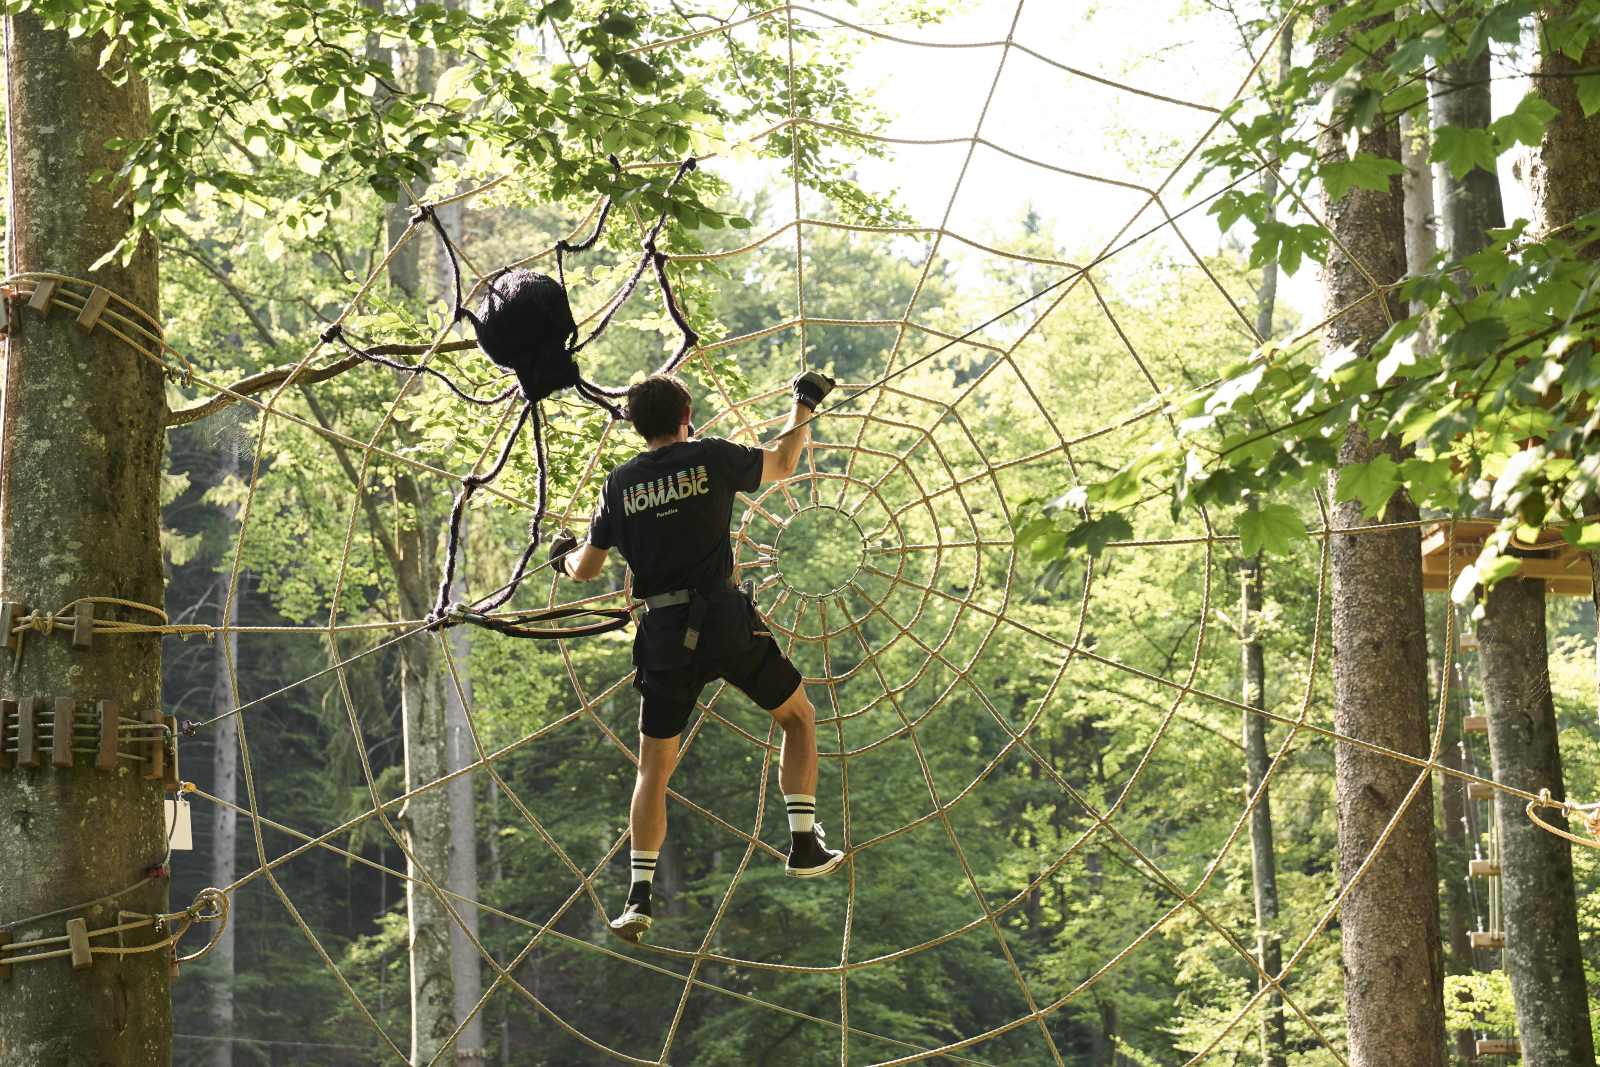 man climbing in spider web made of hemp ropes